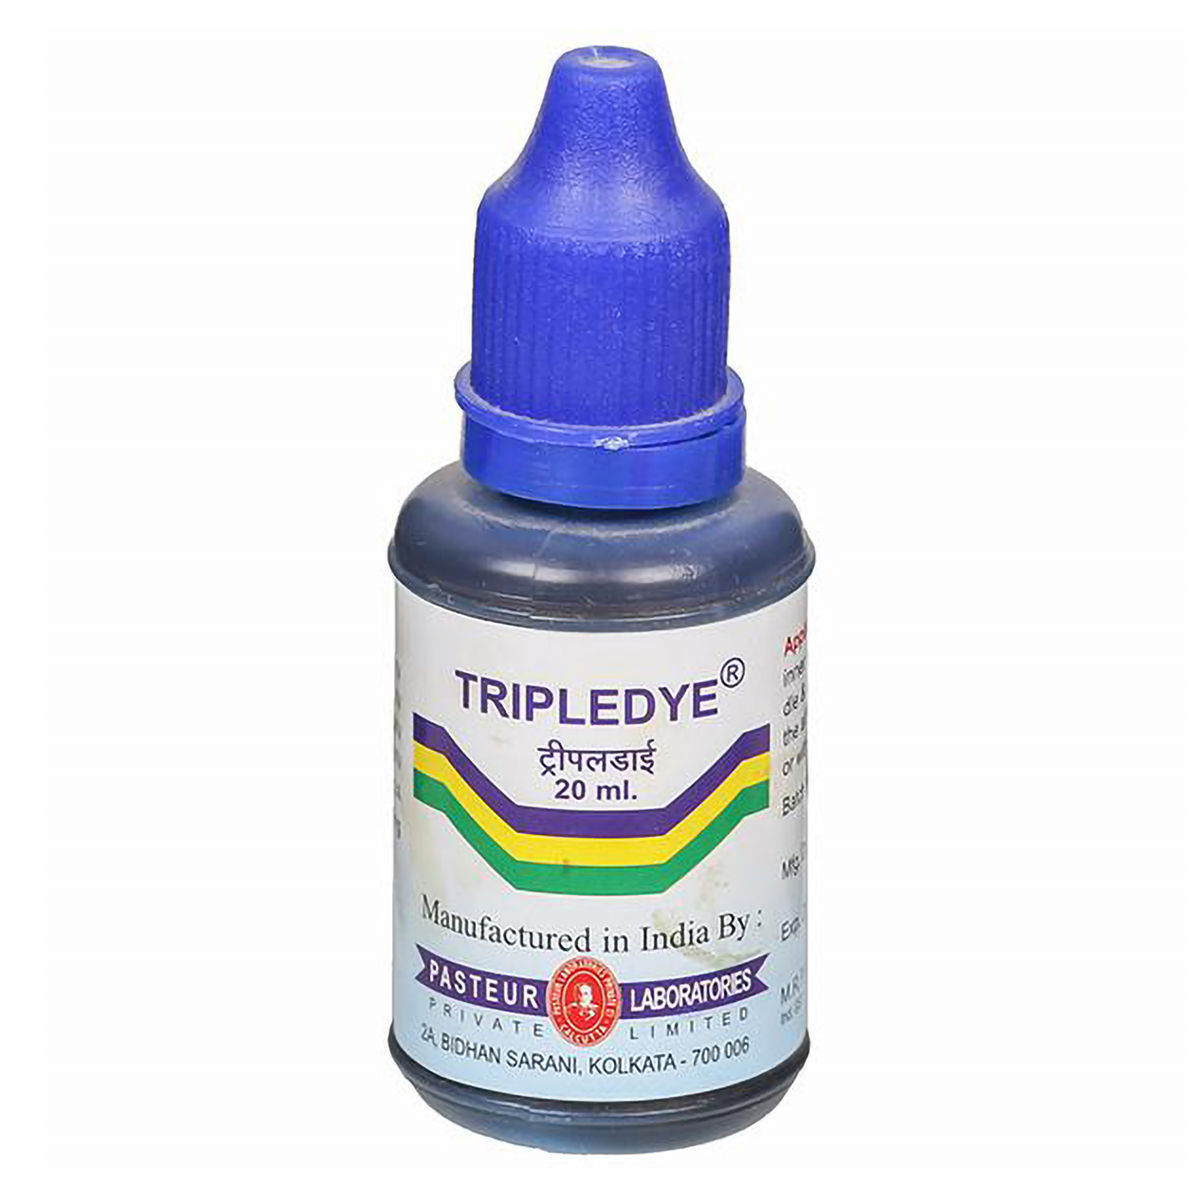 Buy Tripledye Liquid 20 ml Online